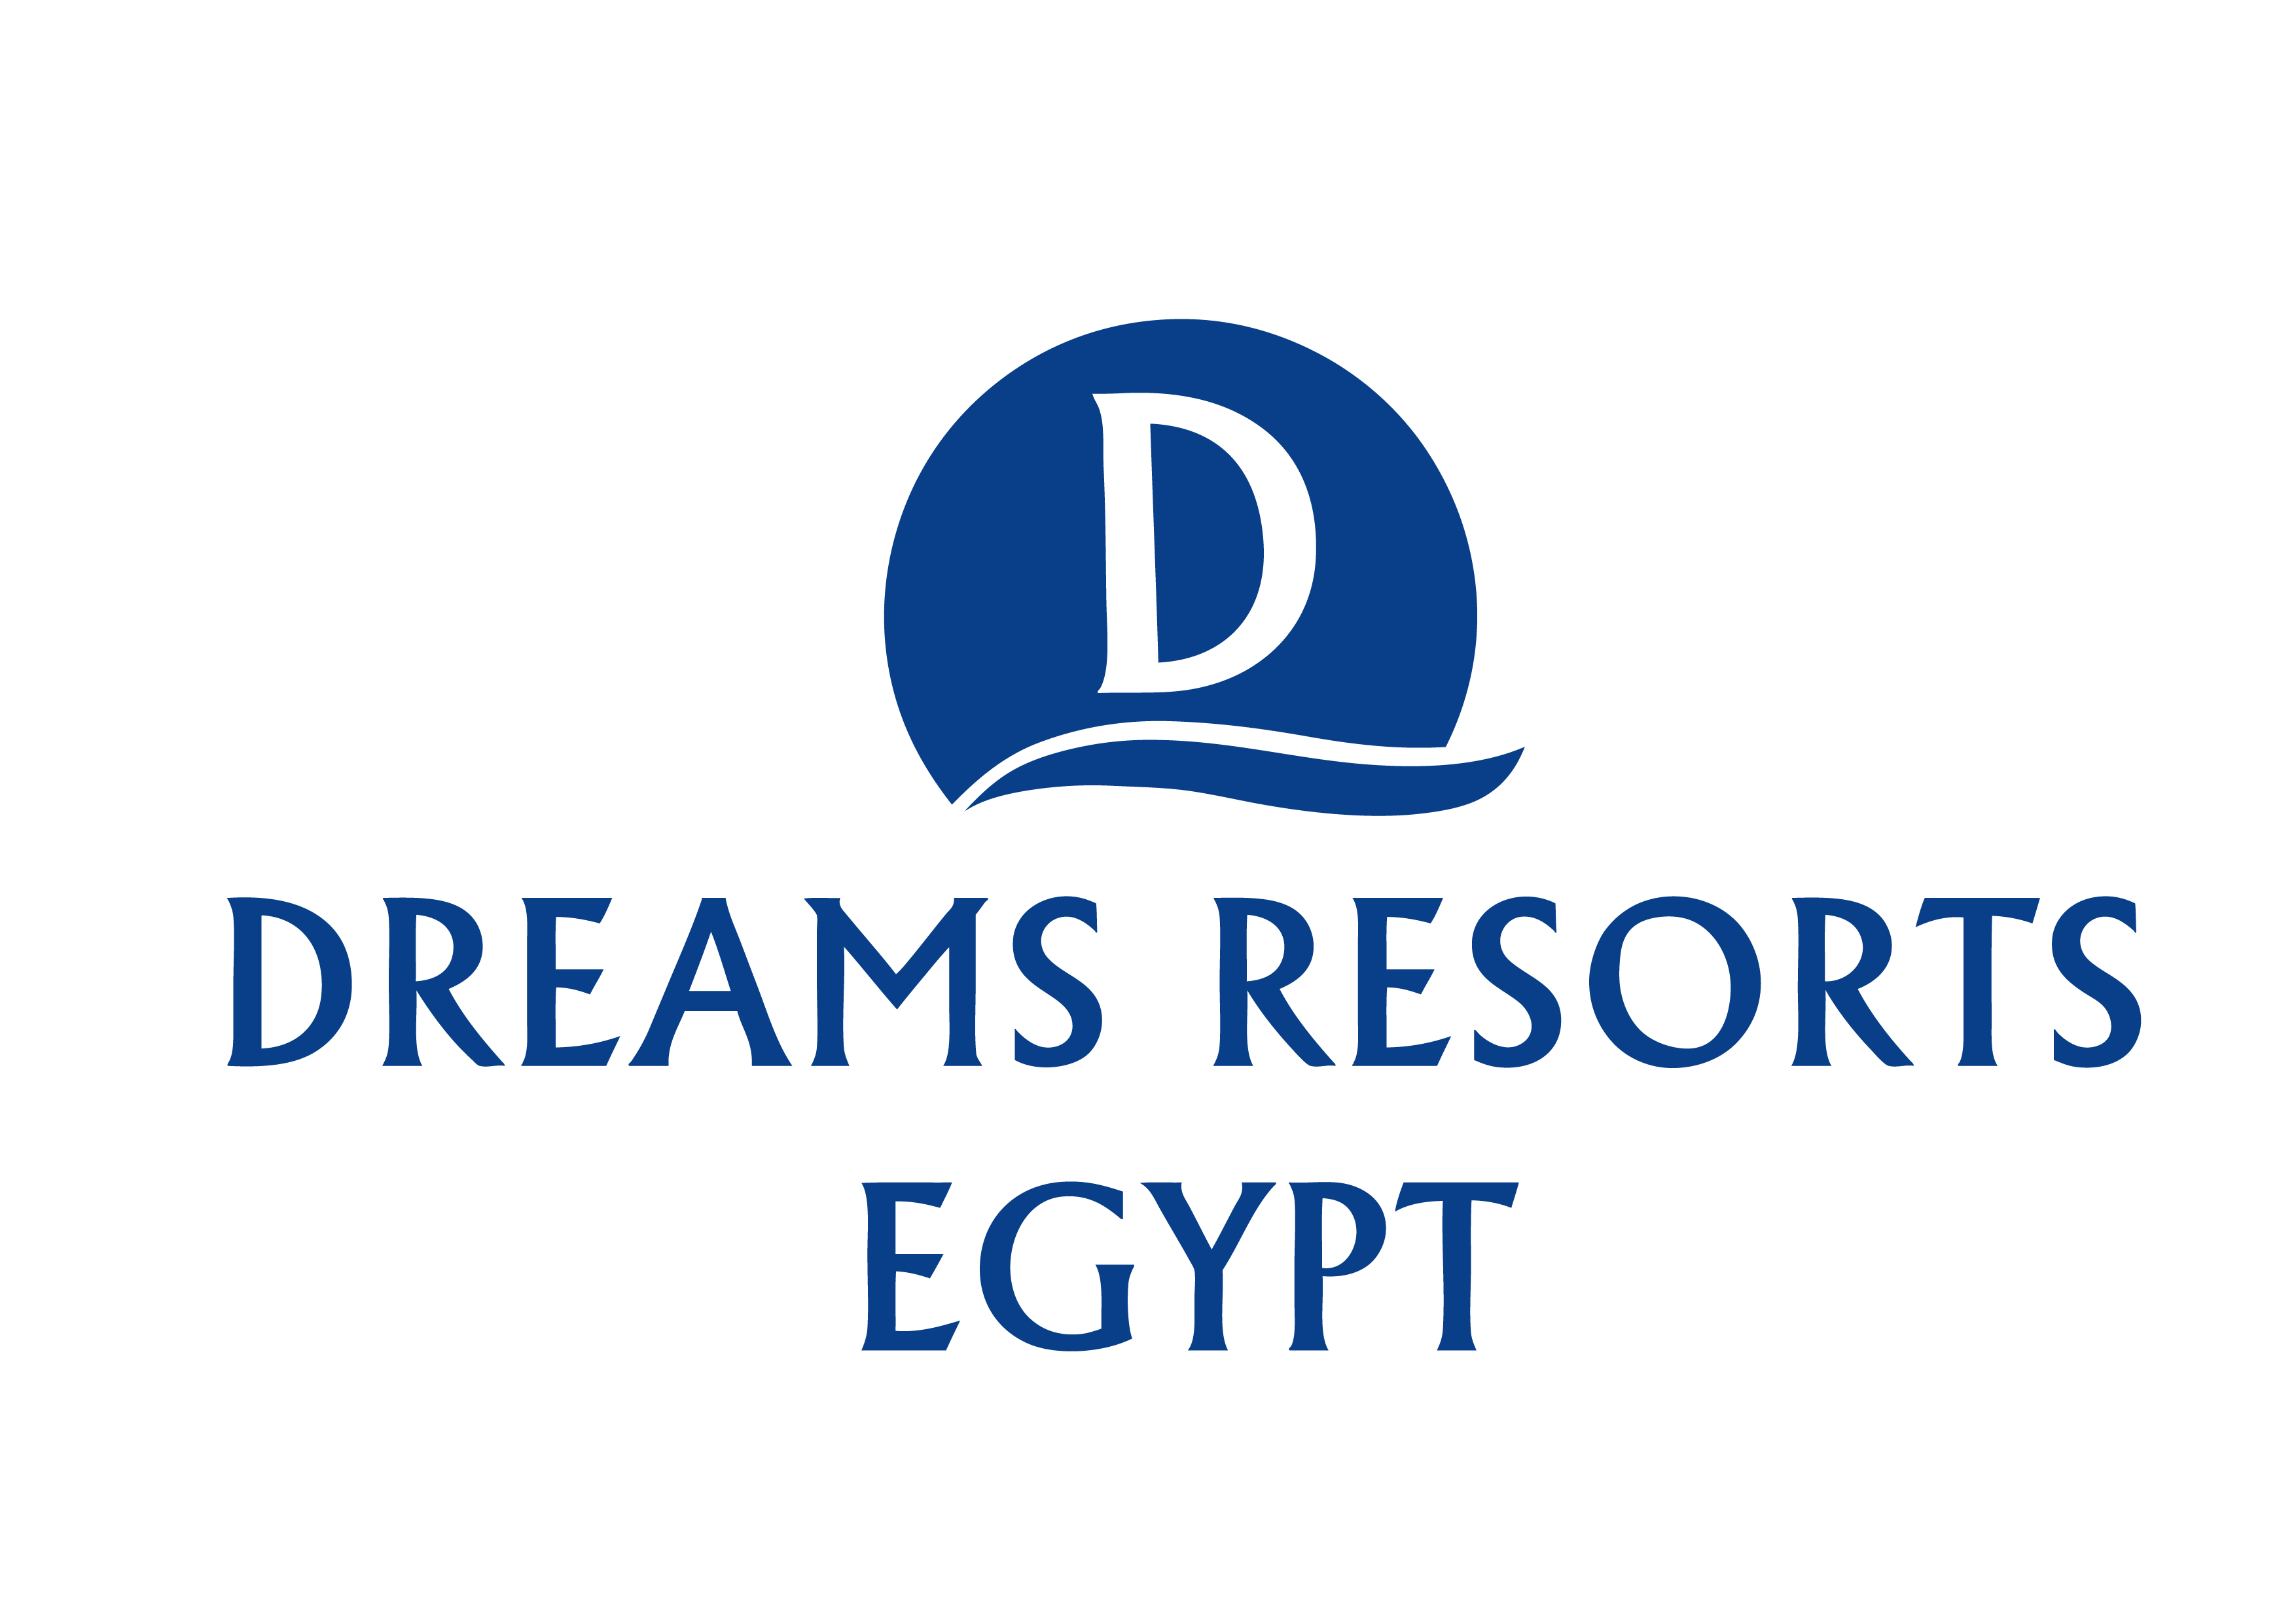 Dreams Resorts Egypt